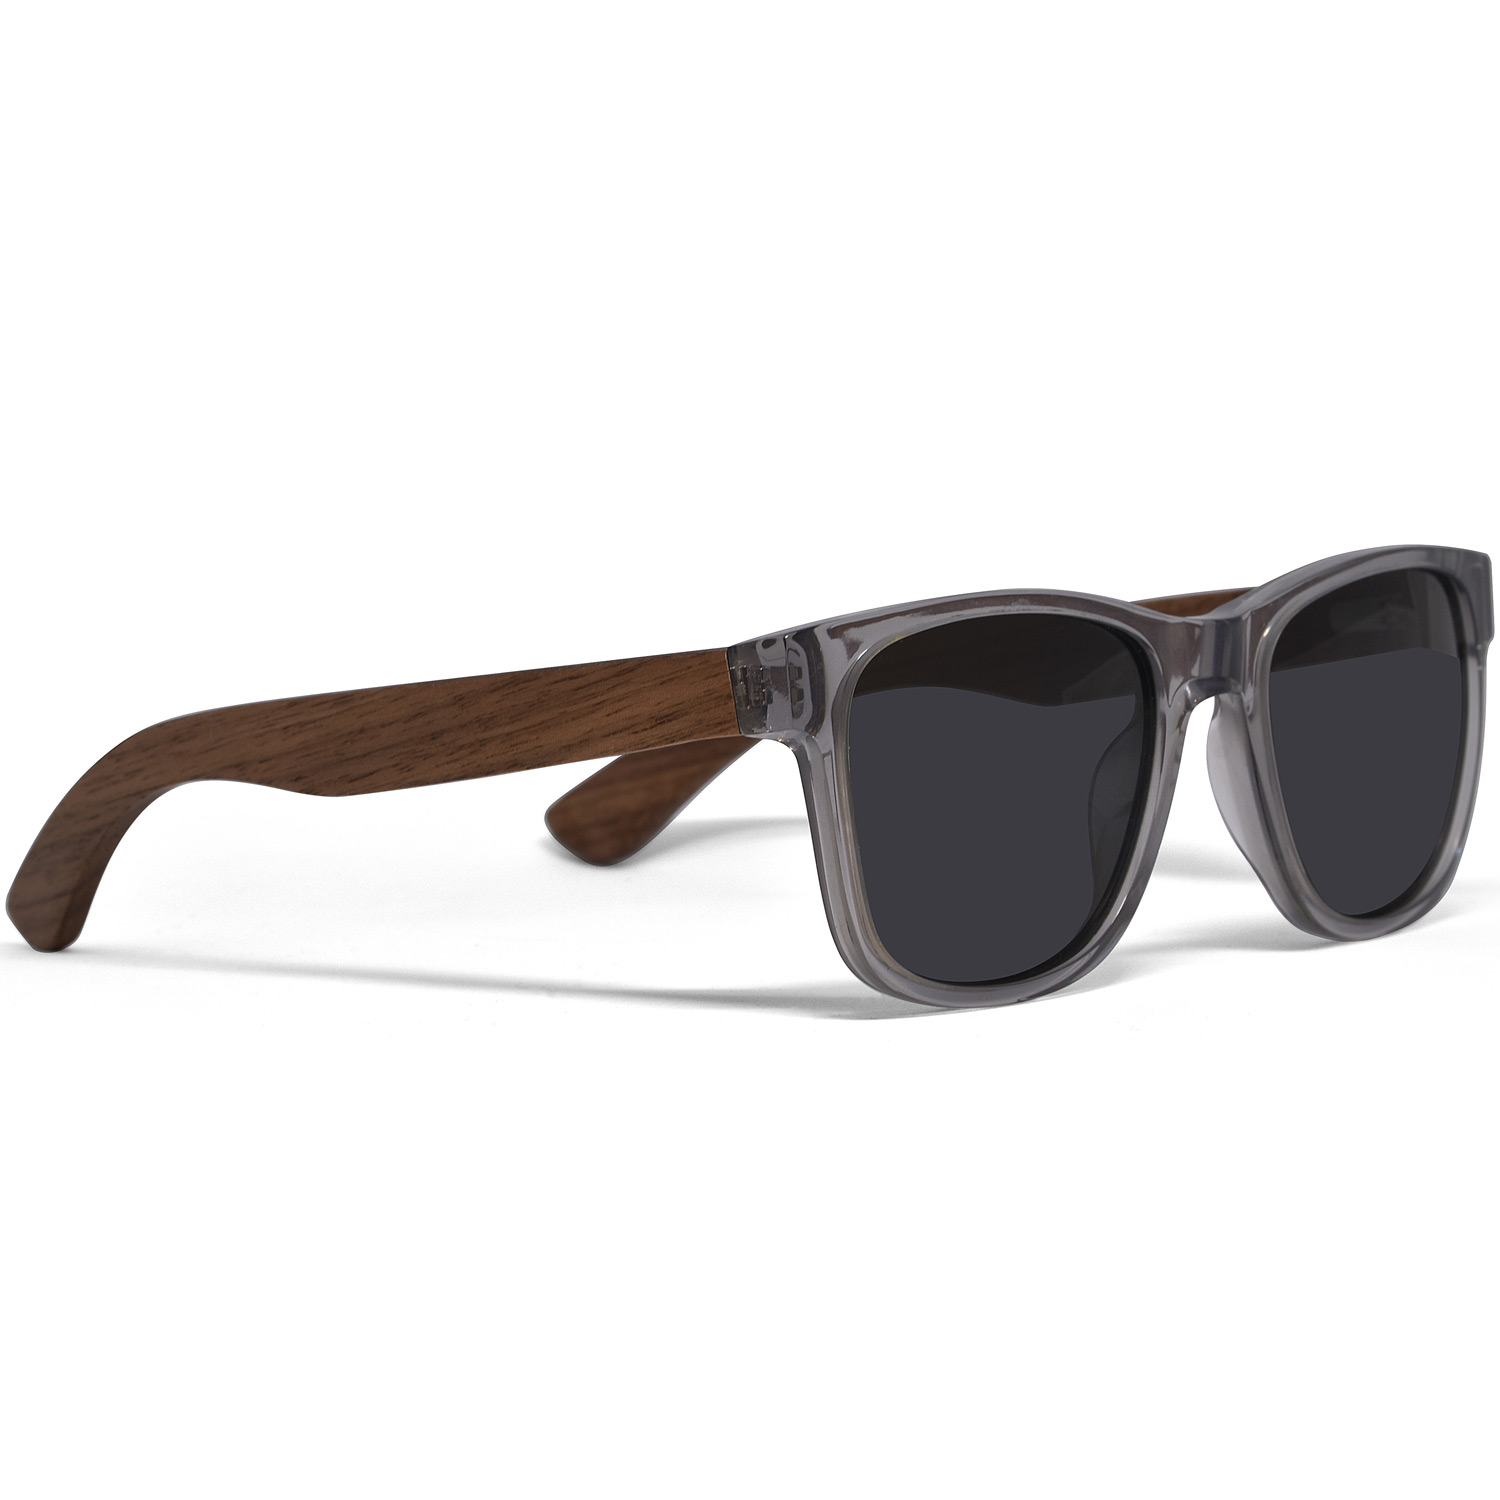 Walnut wood sunglasses classic style transparent frame right